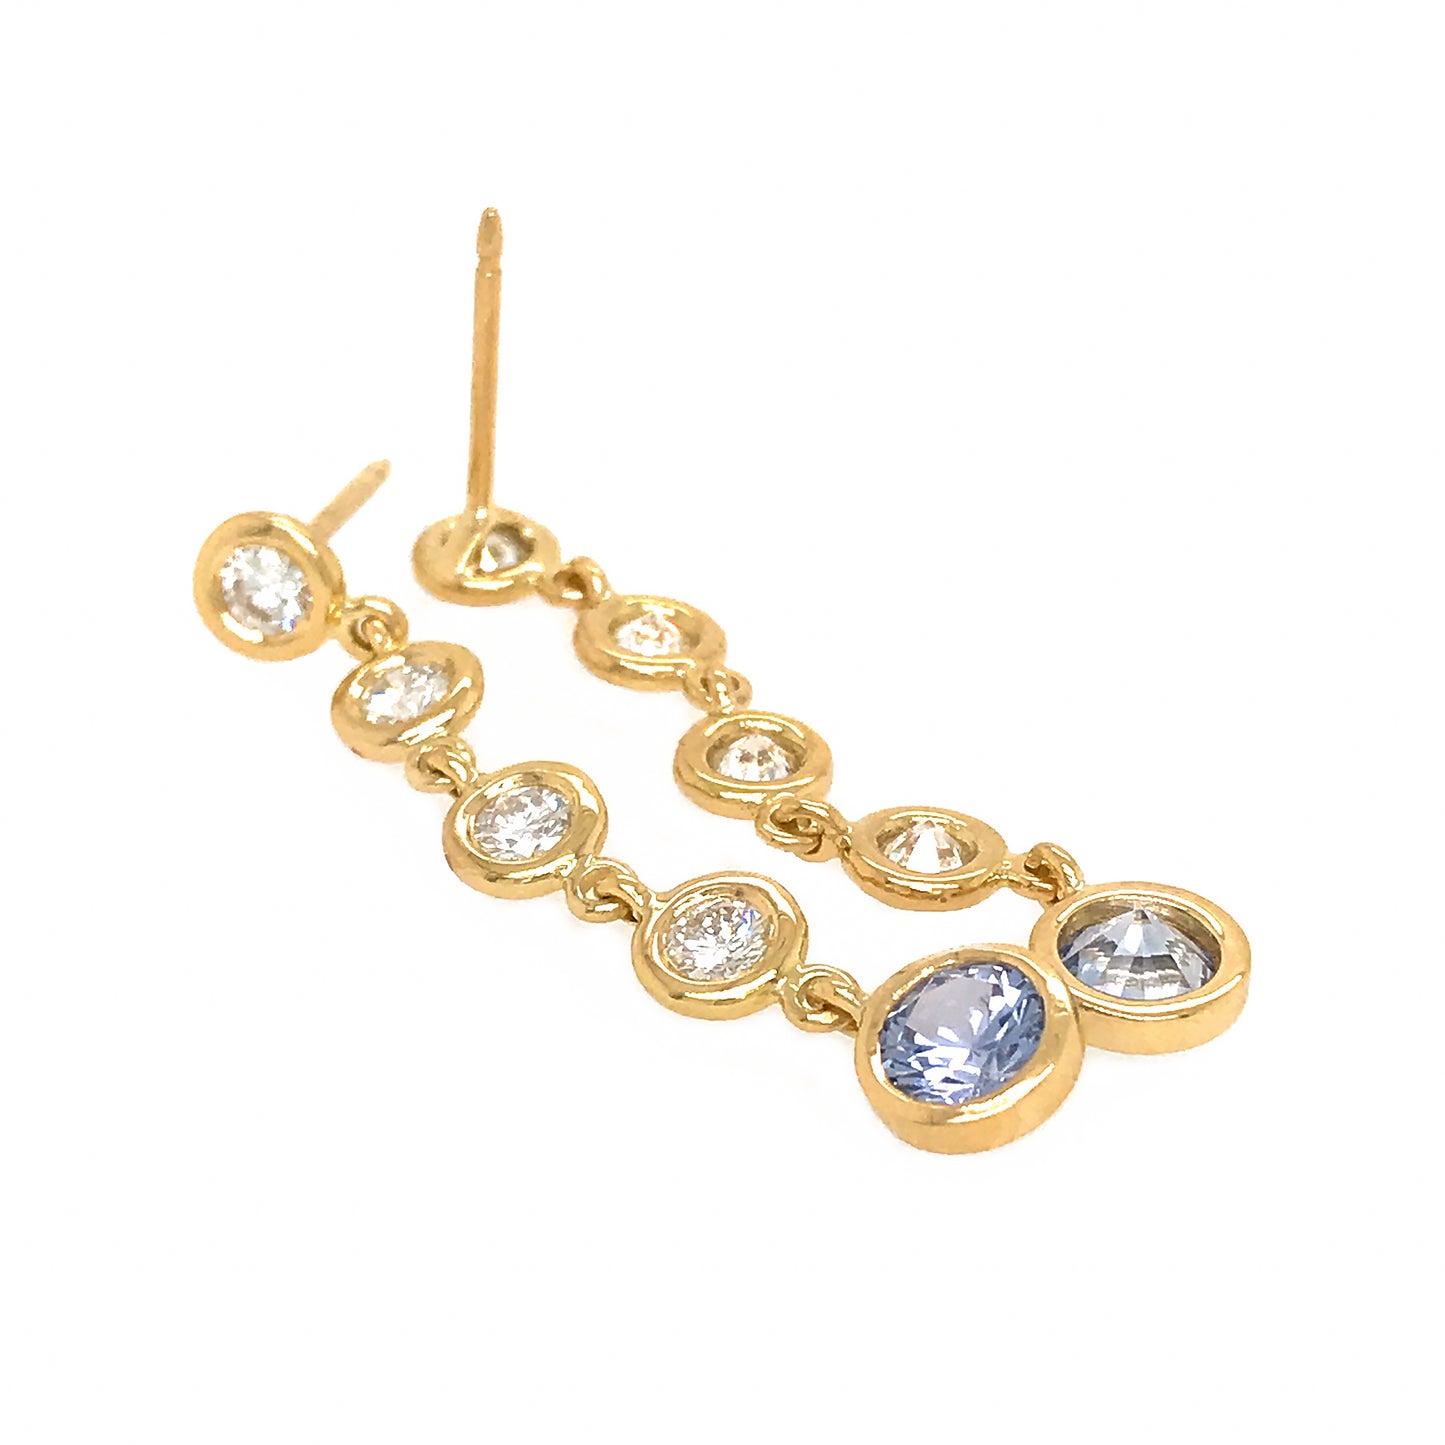 FAB DROPS 18K Yellow Gold Diamond and Light Blue Ceylon Sapphire Drop Earrings